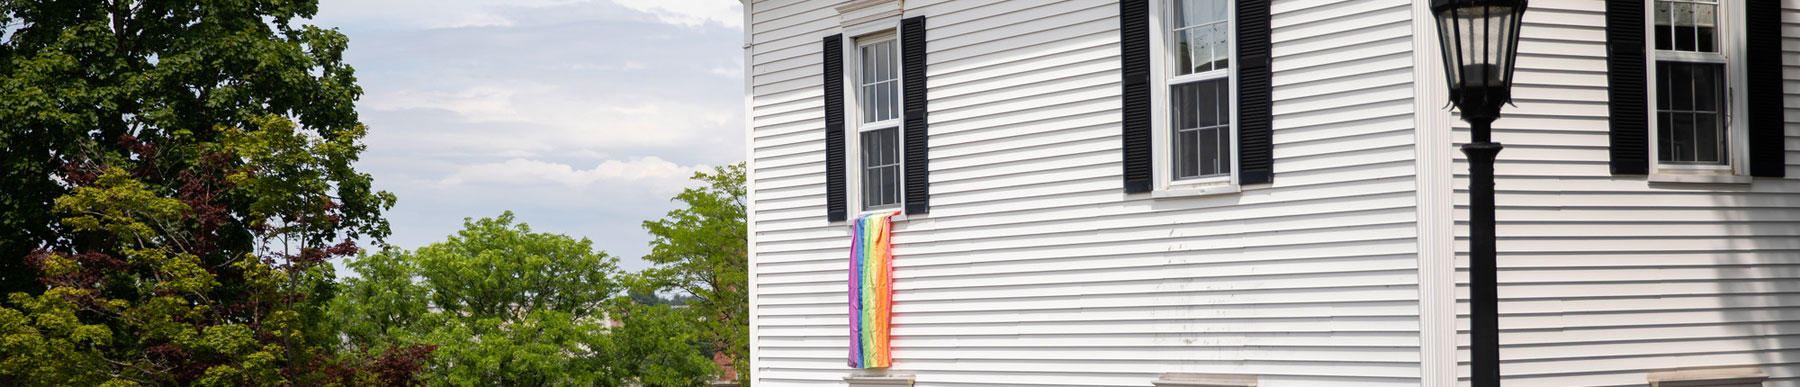  rainbow flag hangs outside window of campion house